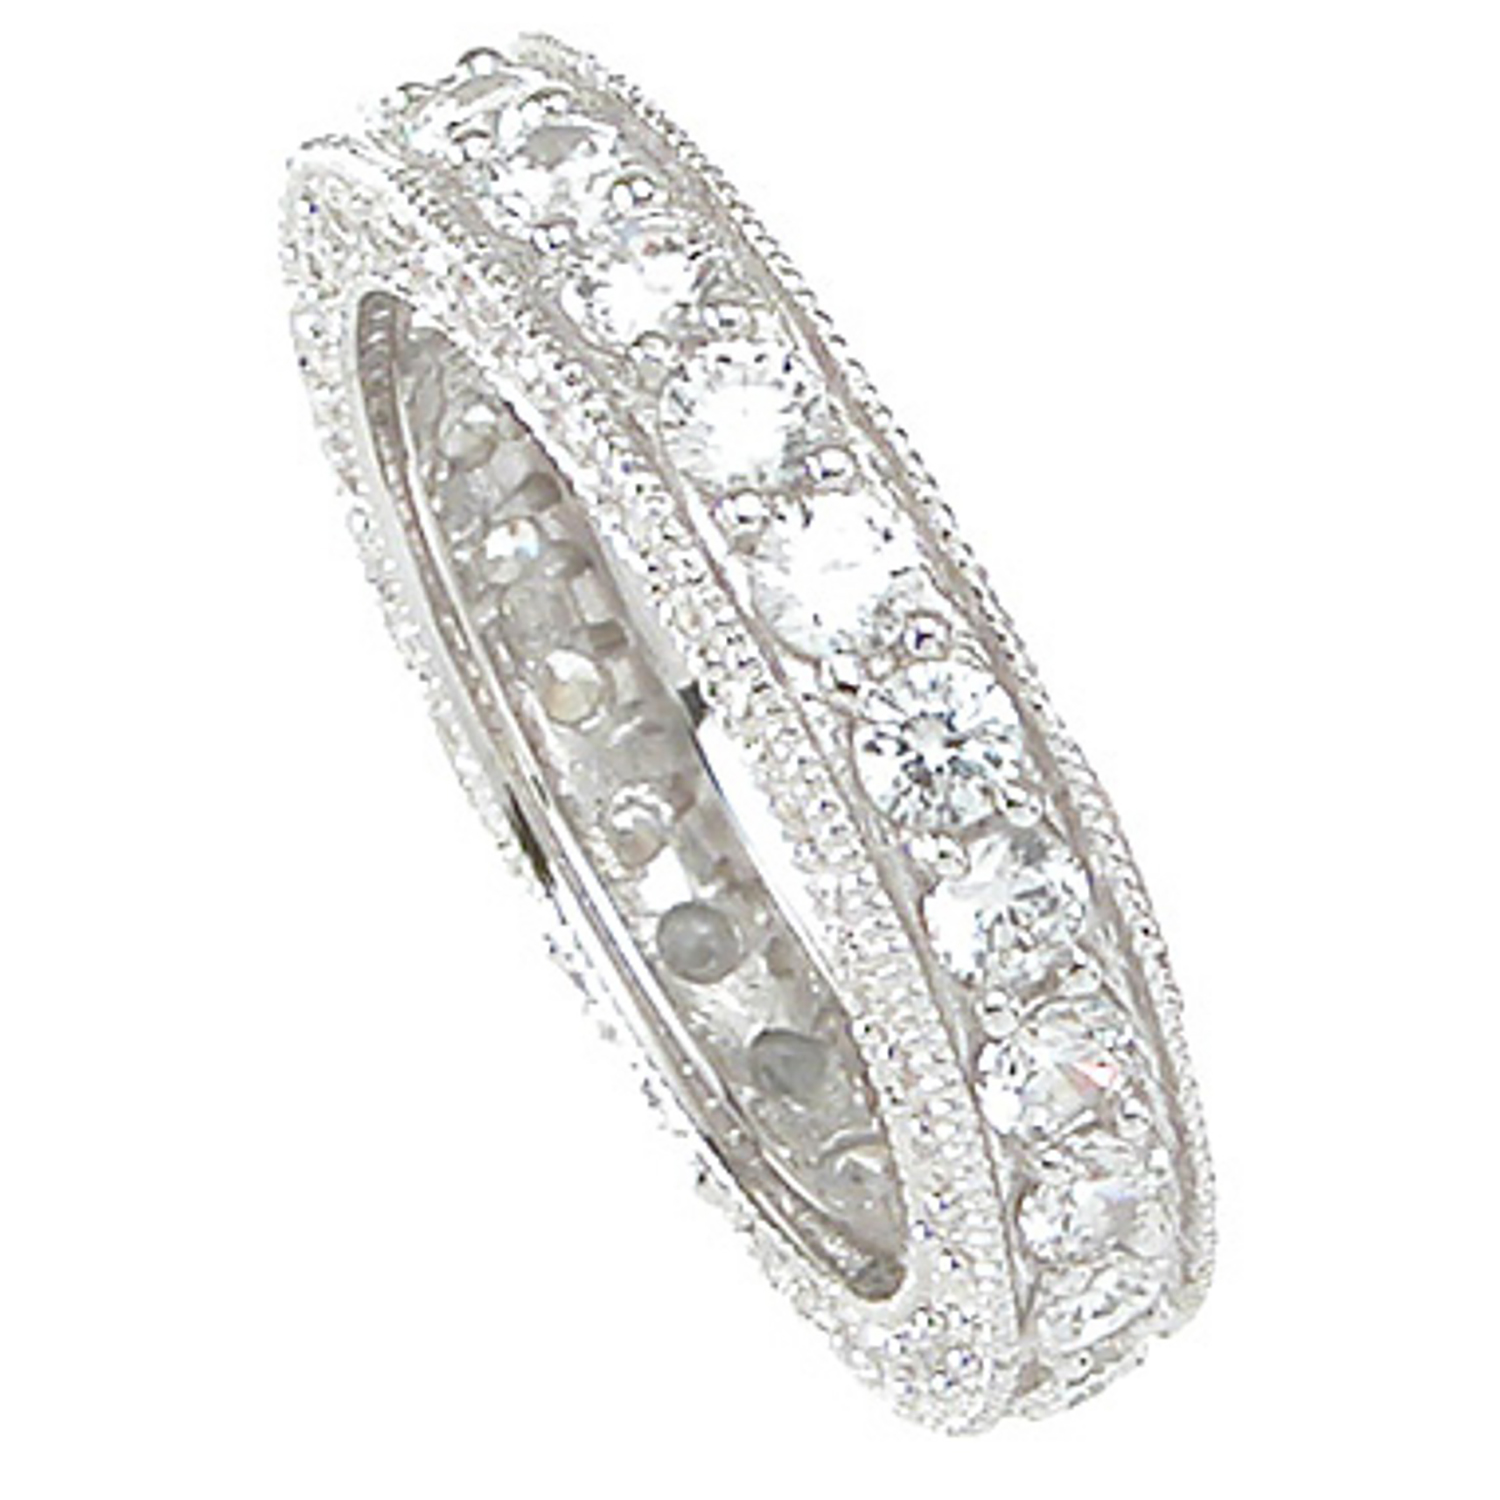 LaRaso Co CZ Wedding Band Eternity Anniversary Ring for Women Size 9 - image 2 of 4